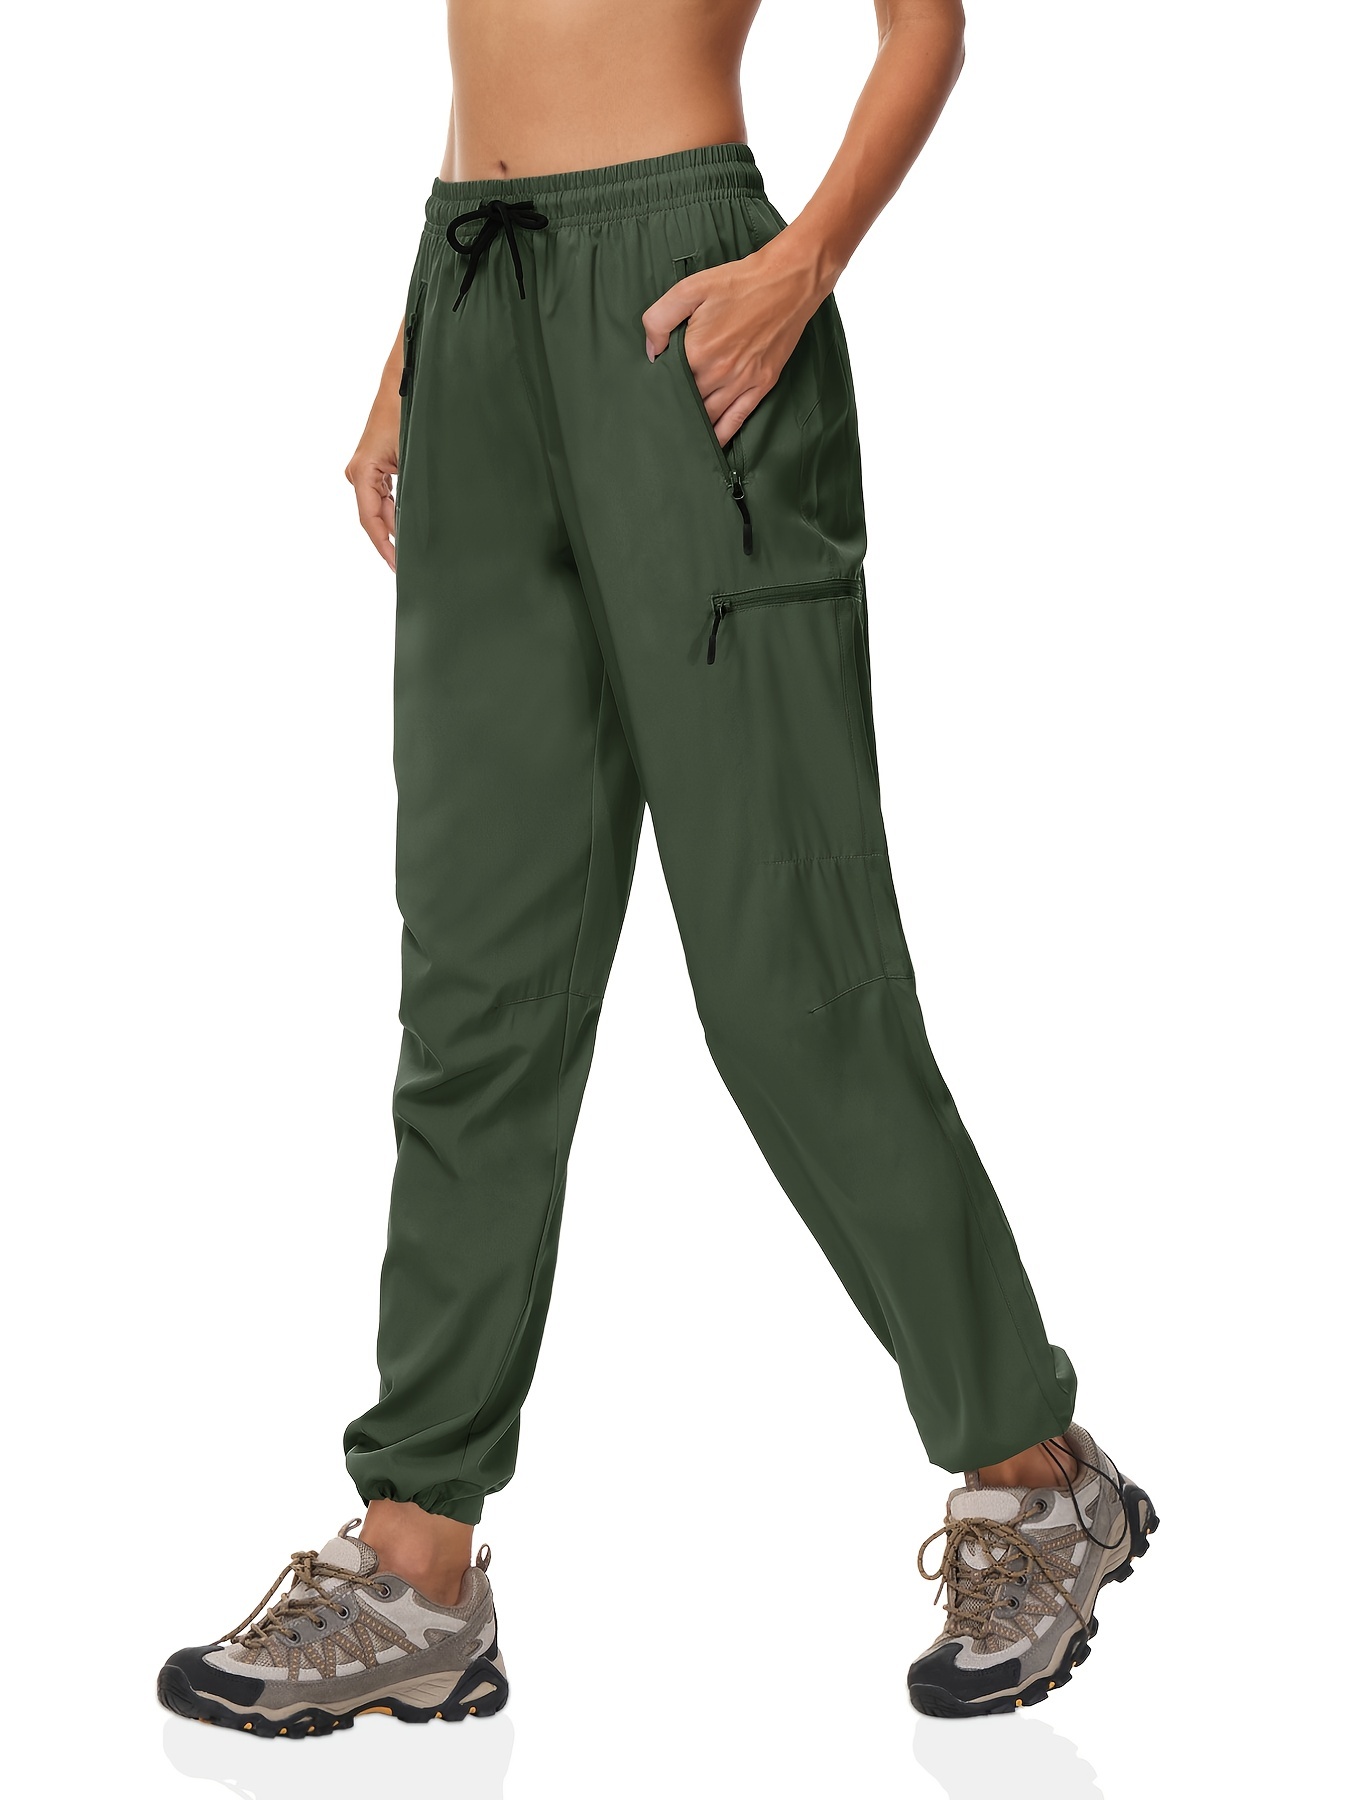 Sweatpants Women, Women's Work Wear Jogging Pants, Nylon Quick Drying Hiking  Pants, Sports, Fitness, Leisure, Outdoor Small Foot Pants Green XL 